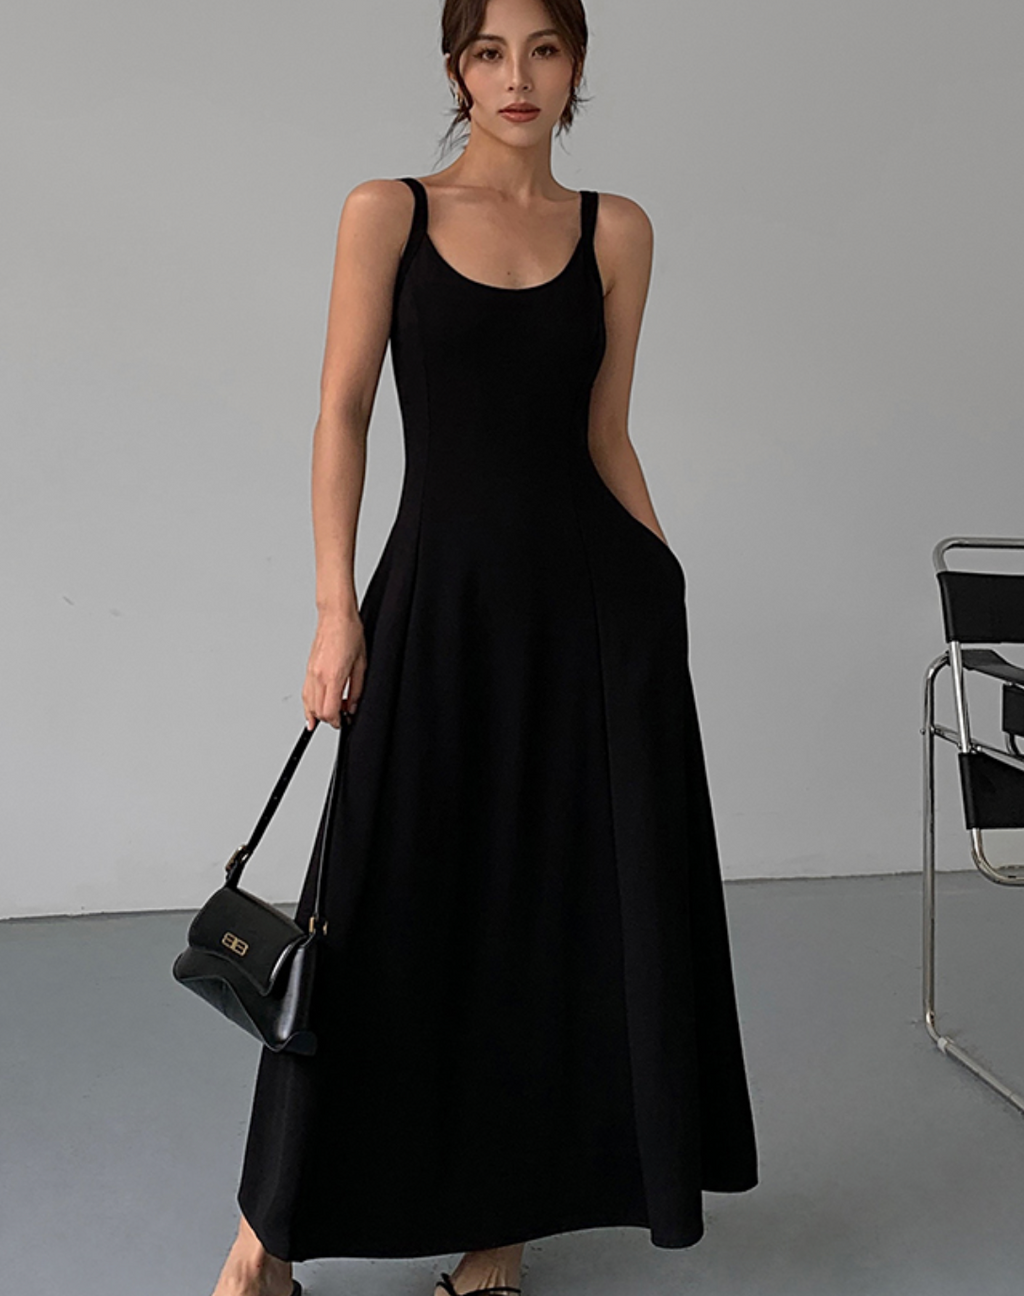 The Essential Black Dress